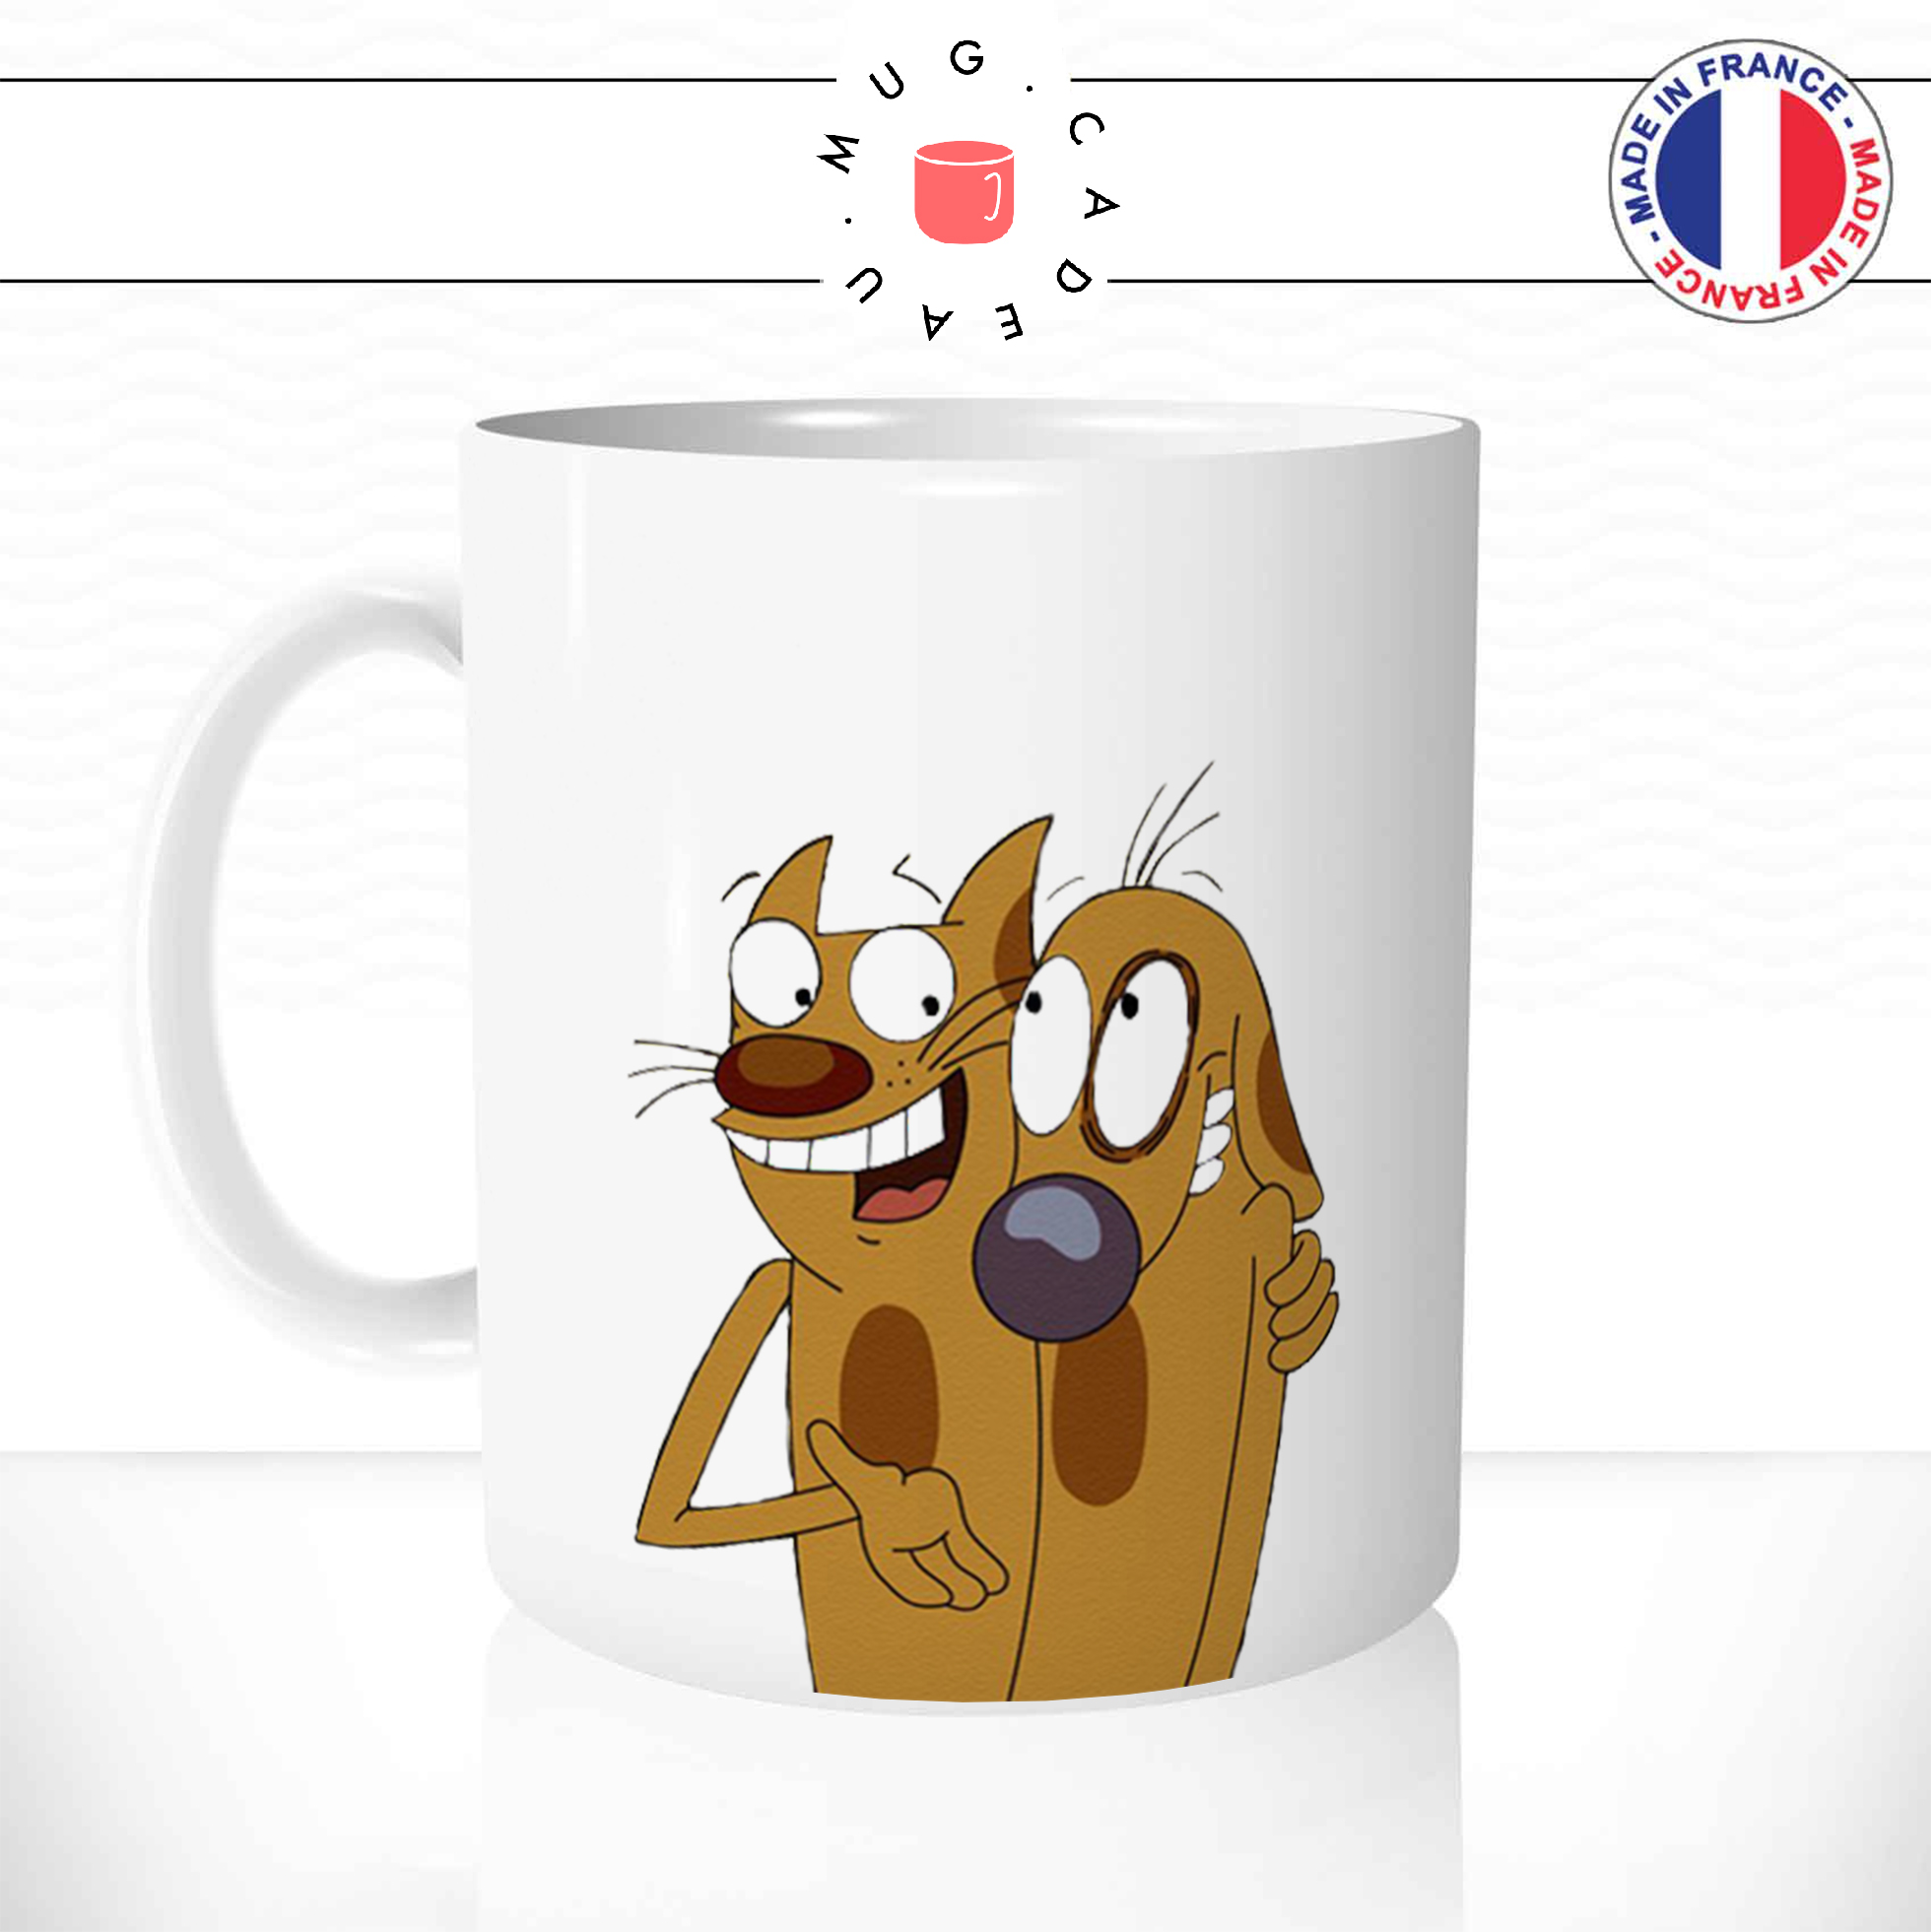 mug-tasse-ref35-dessin-anime-mi-chien-mi-chat-cafe-the-mugs-tasses-personnalise-anse-gauche